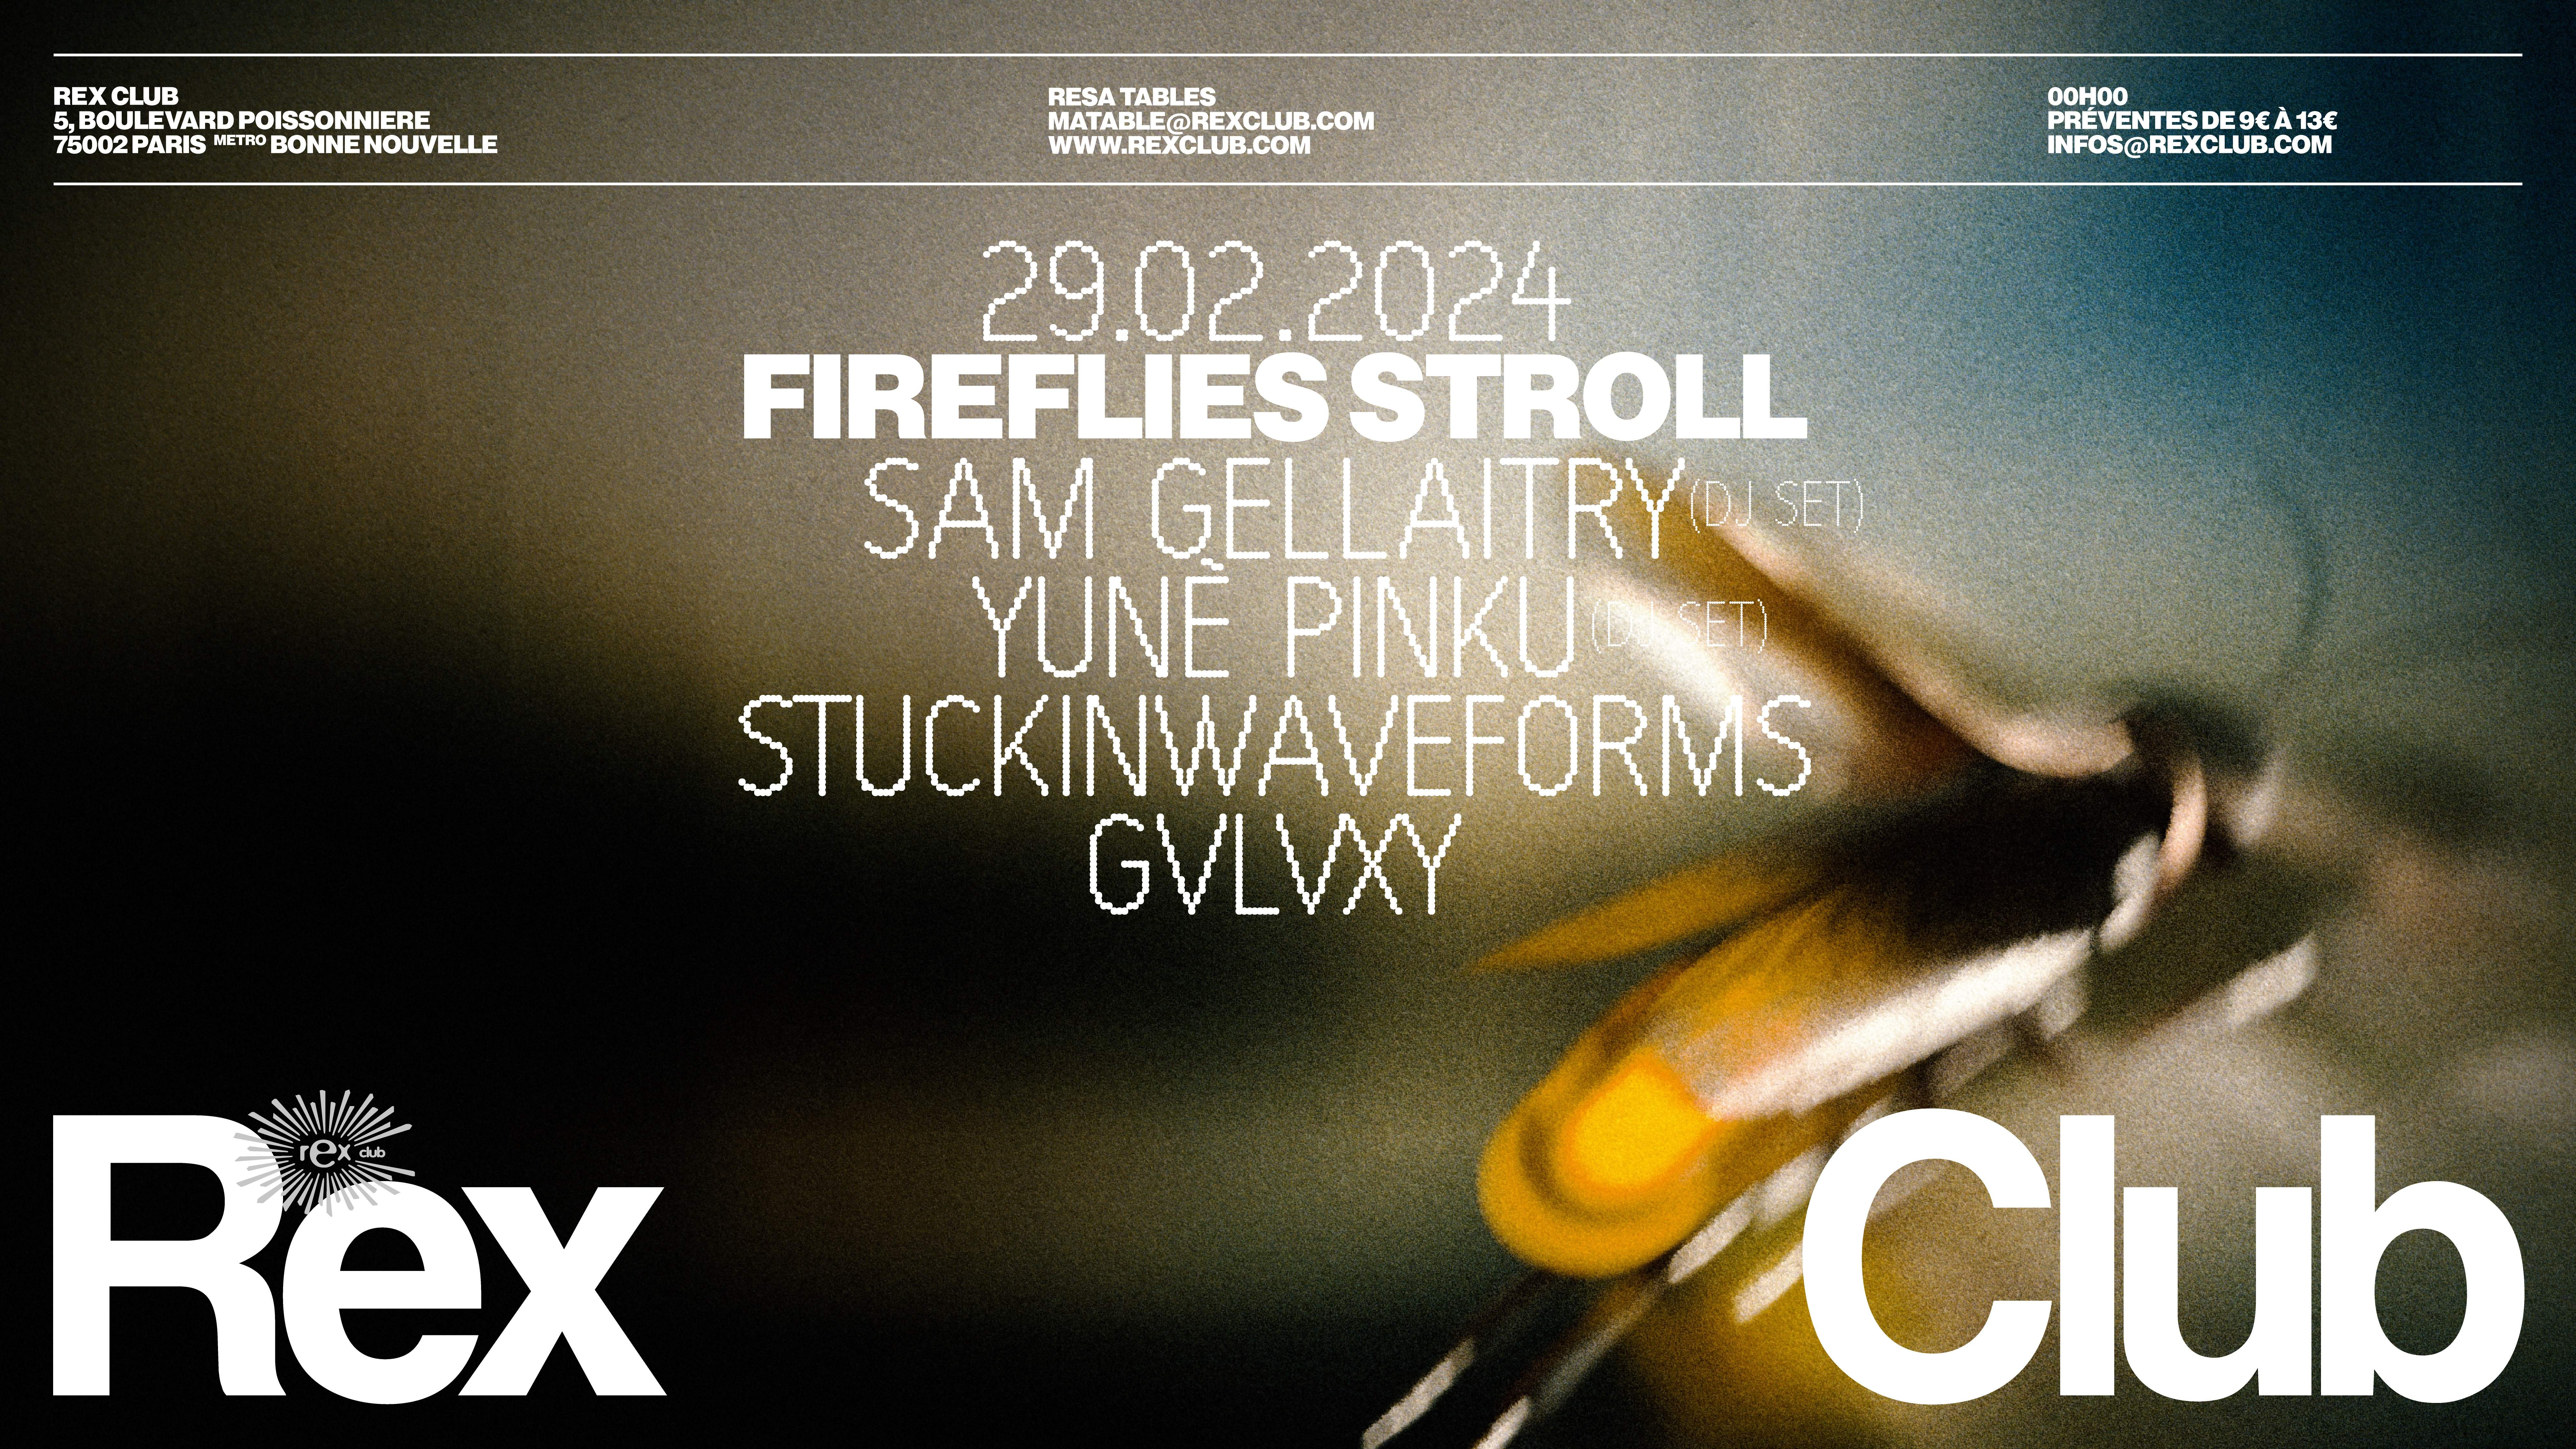 Fireflies Stroll: Sam Gellaitry (djset), Yunè Pinku (djset), Stuckinwaveforms, GVLVXY - フライヤー表